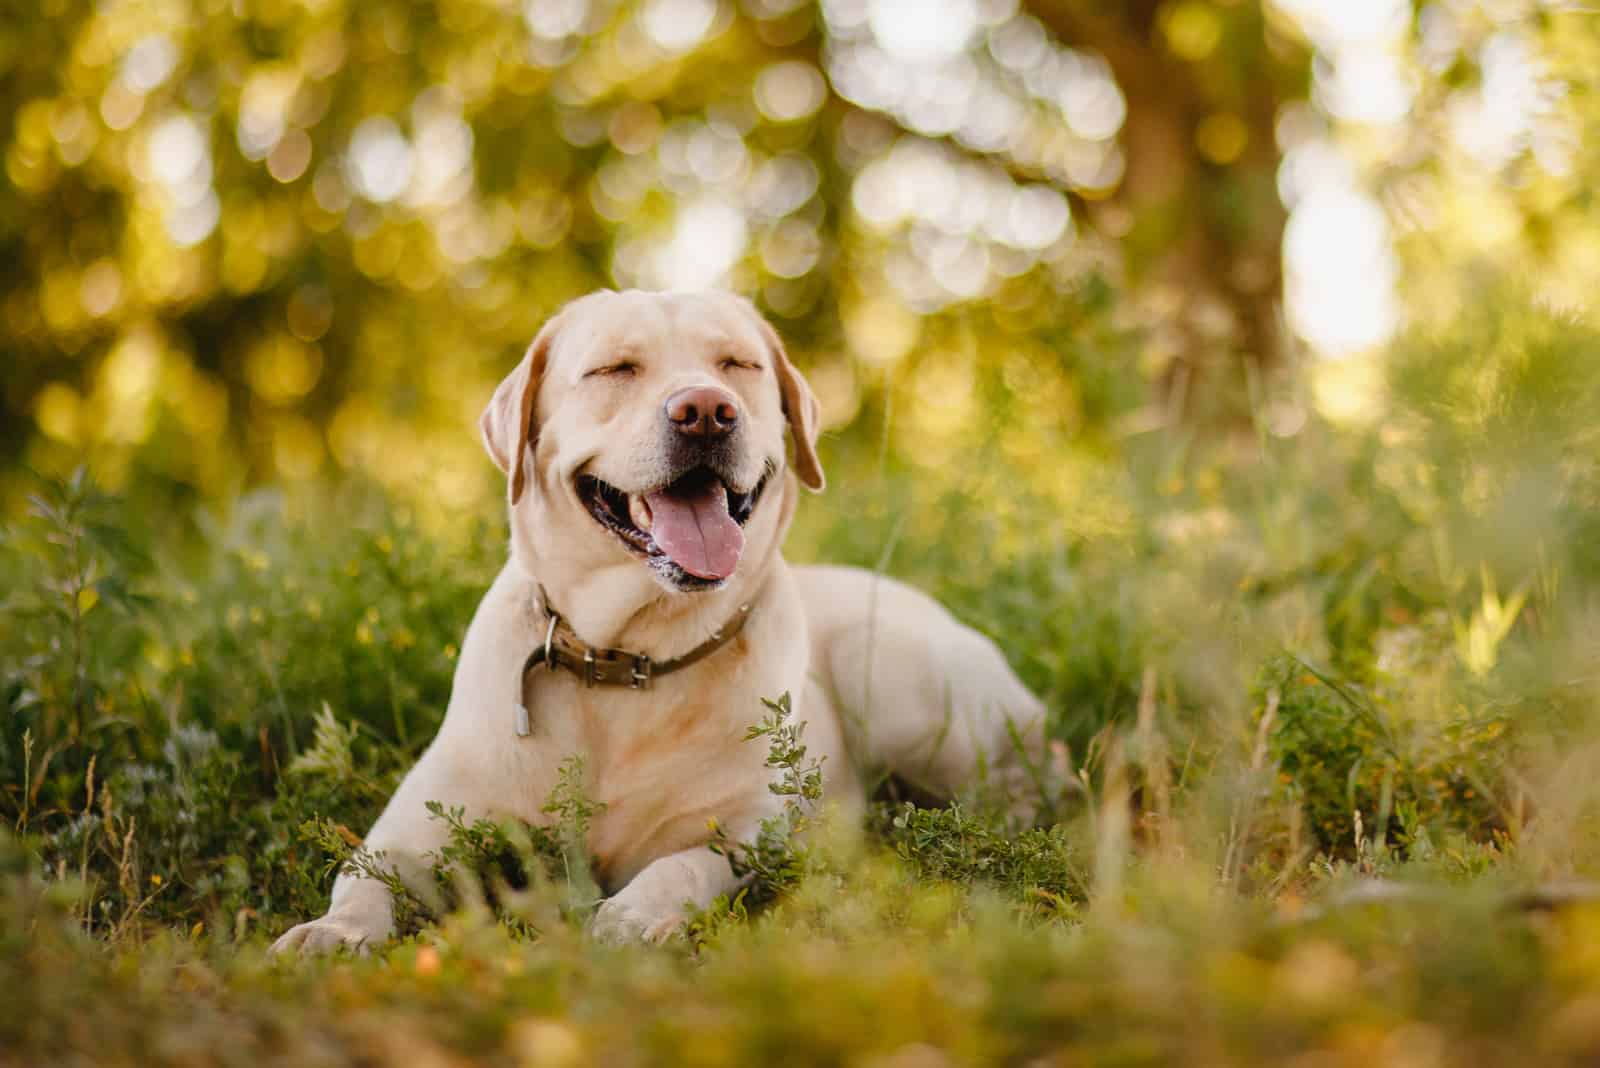 Labrador Retriever lies in the grass and rests